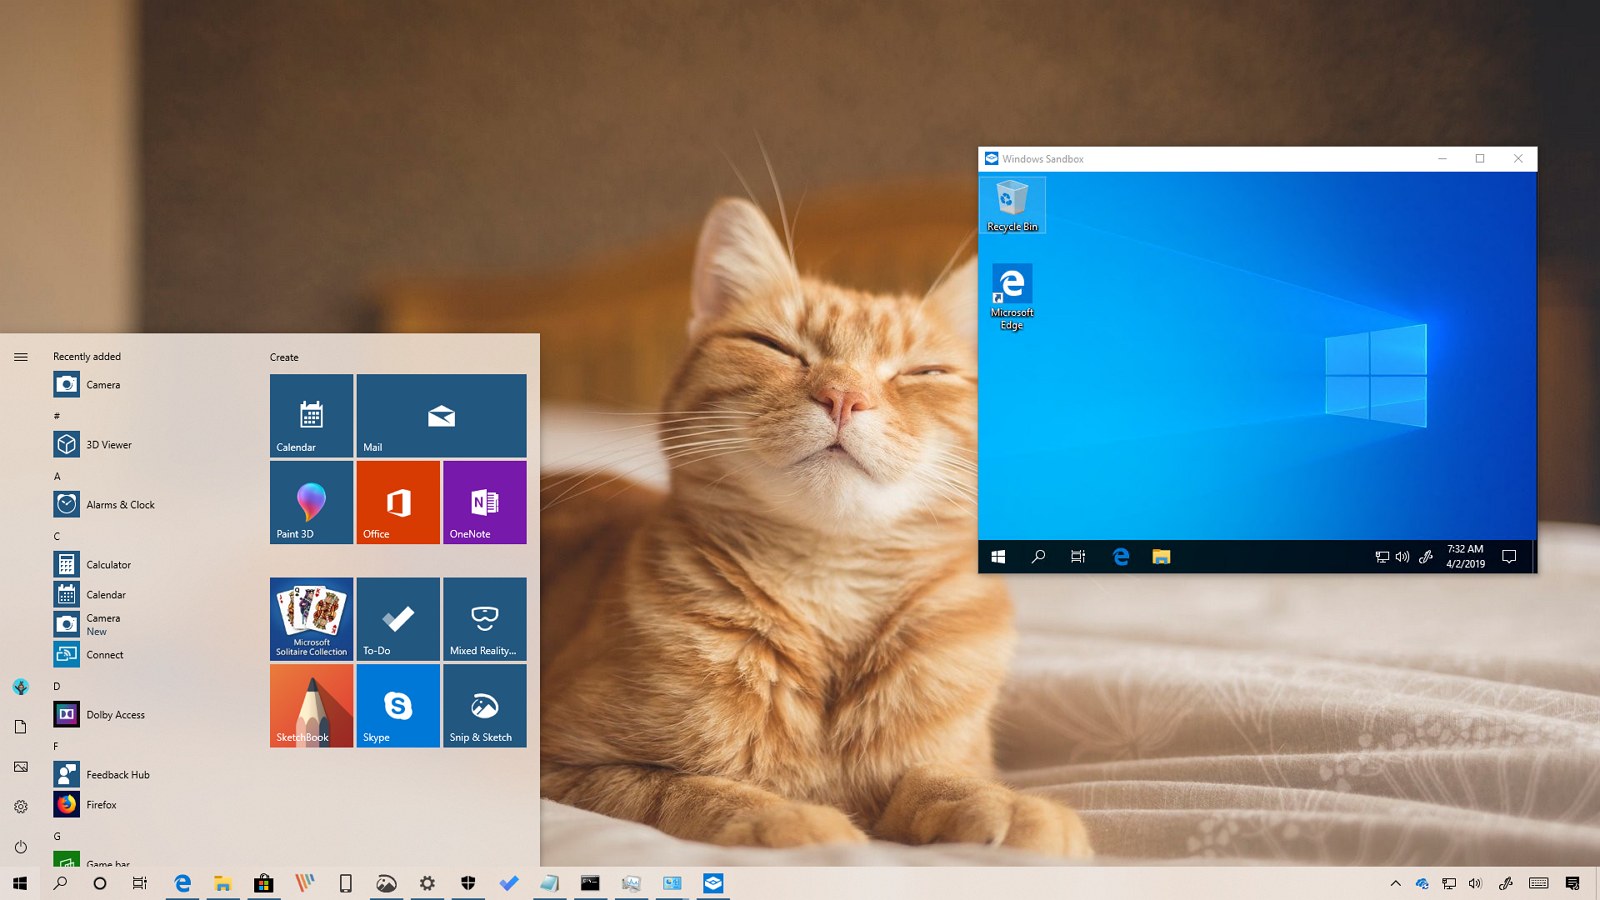 Windows 10 version 1903, April 2019 Update, review